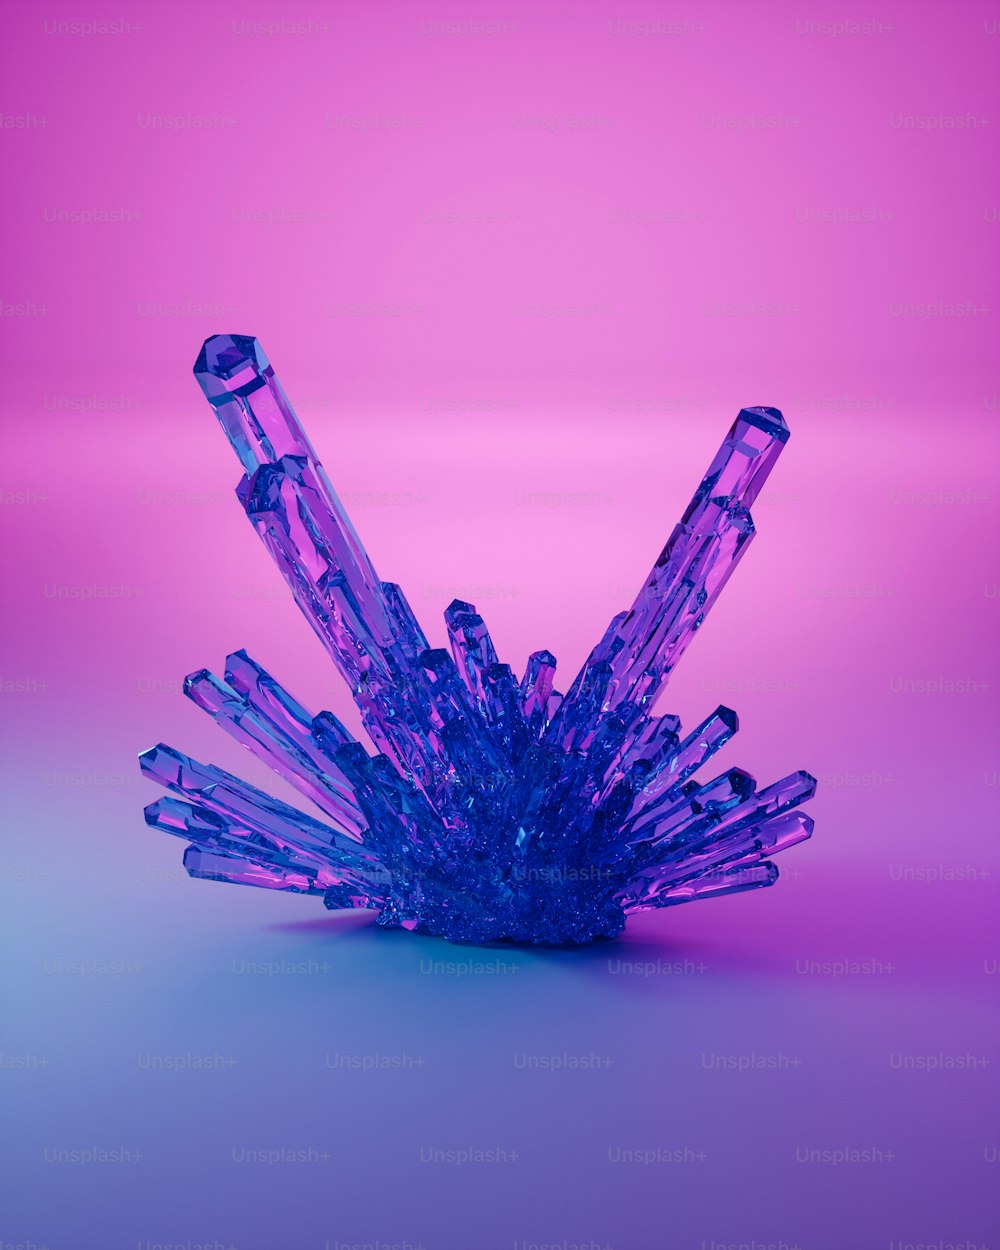 Un objeto púrpura sentado encima de una mesa